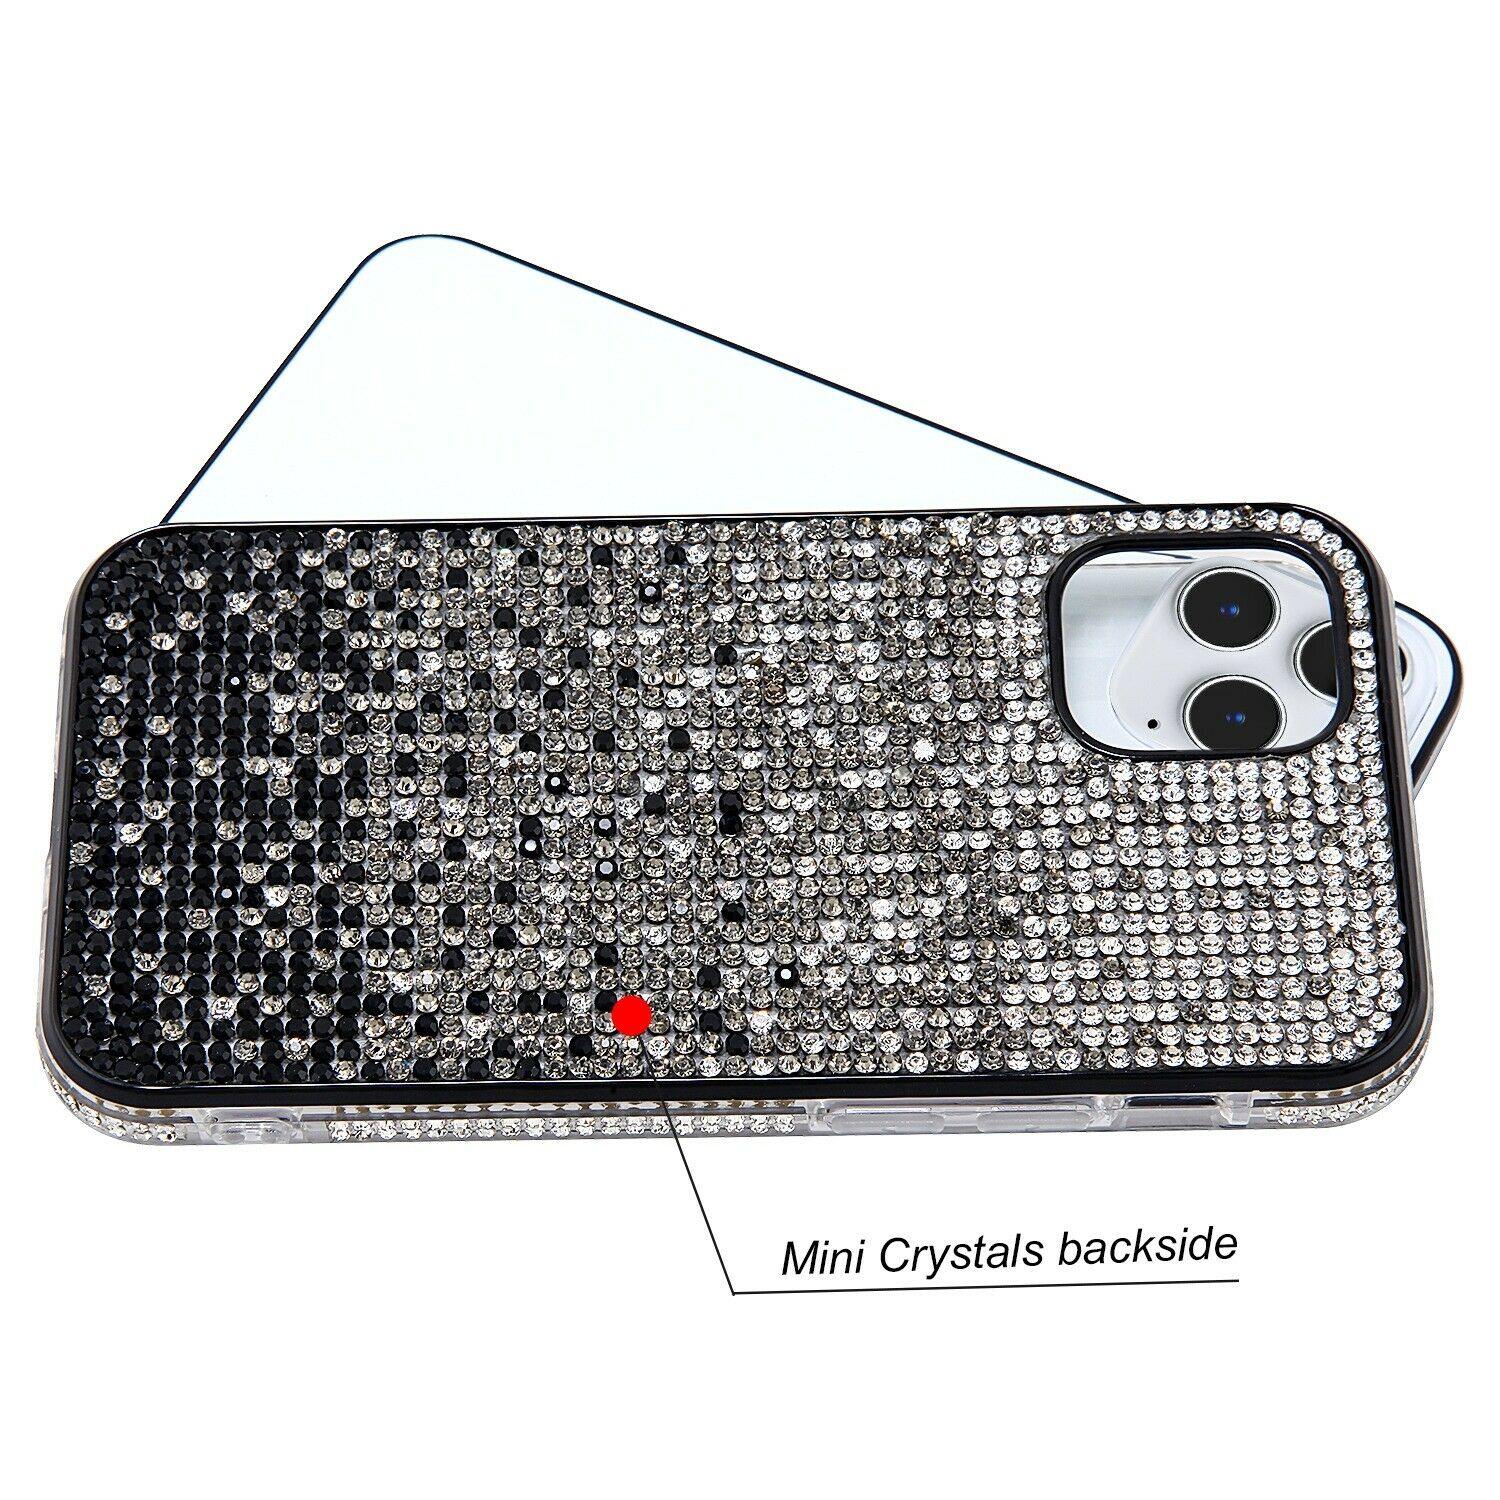 Diamond Bling Crystal Case Black iPhone 12 /12 Pro Max - carolay.co